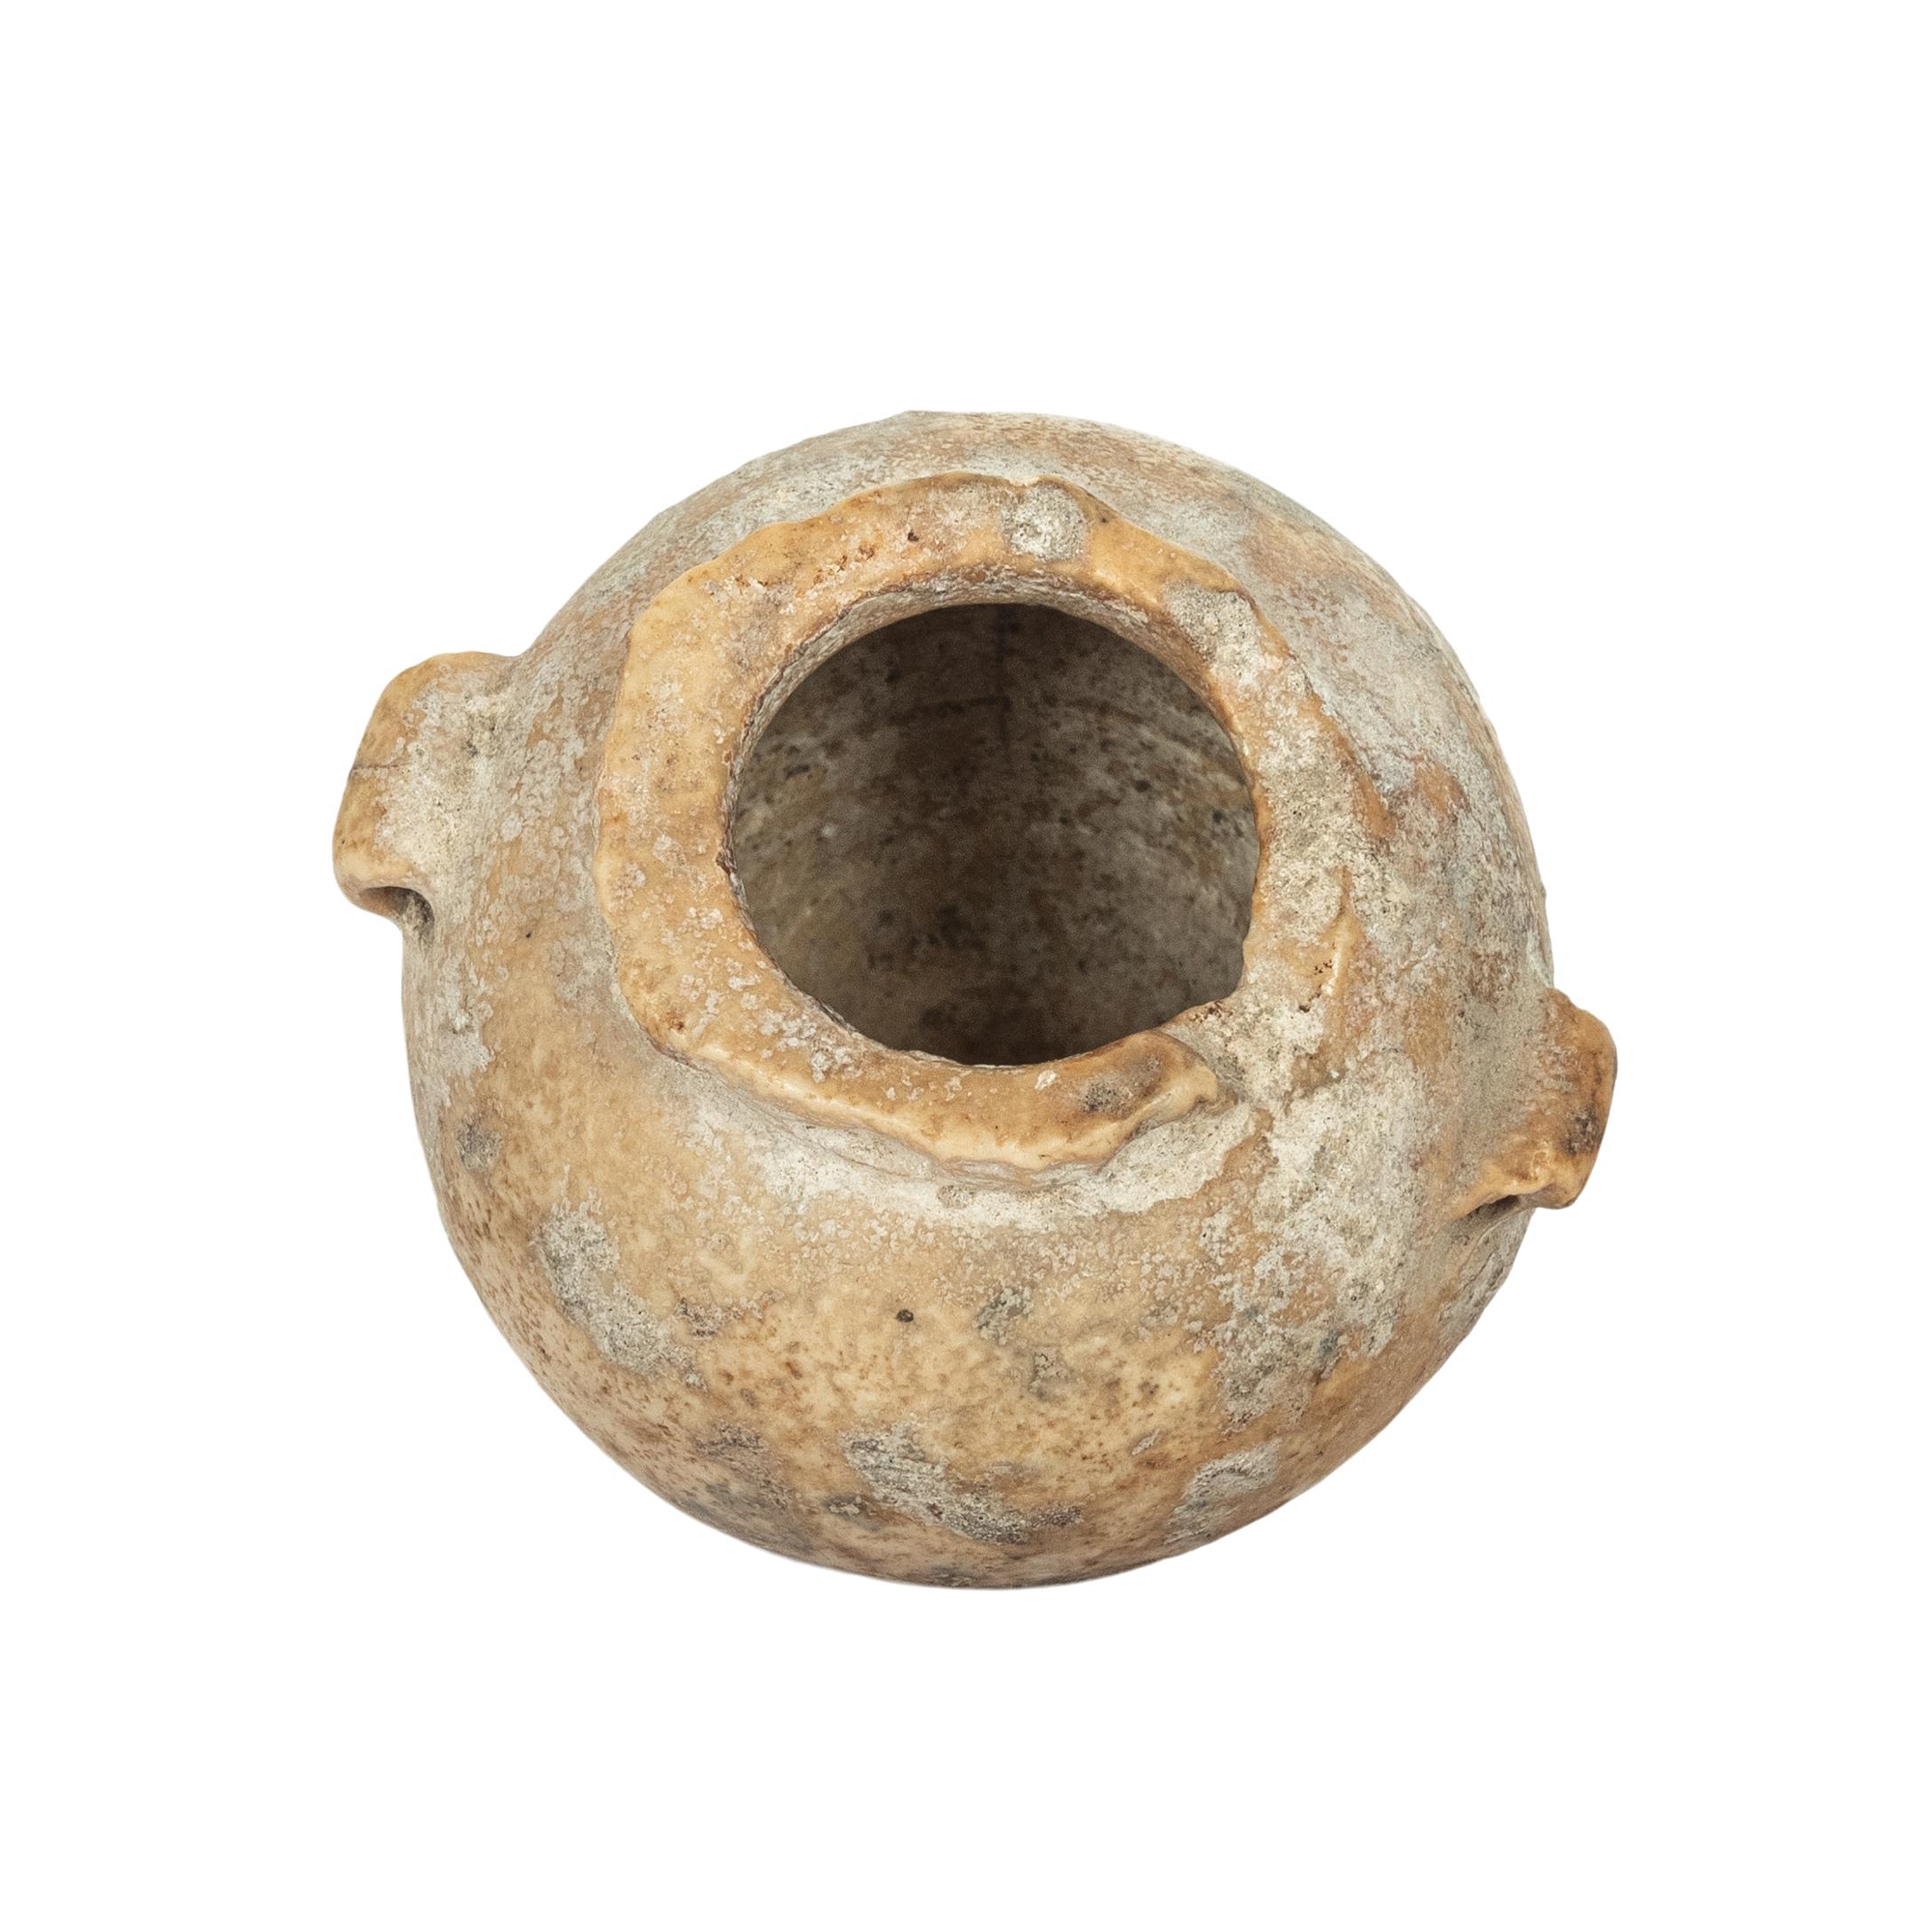 Ancienne Égypte Ancien Empire Miniature A Stone Vessel Jar 2600-2800 BCE 2